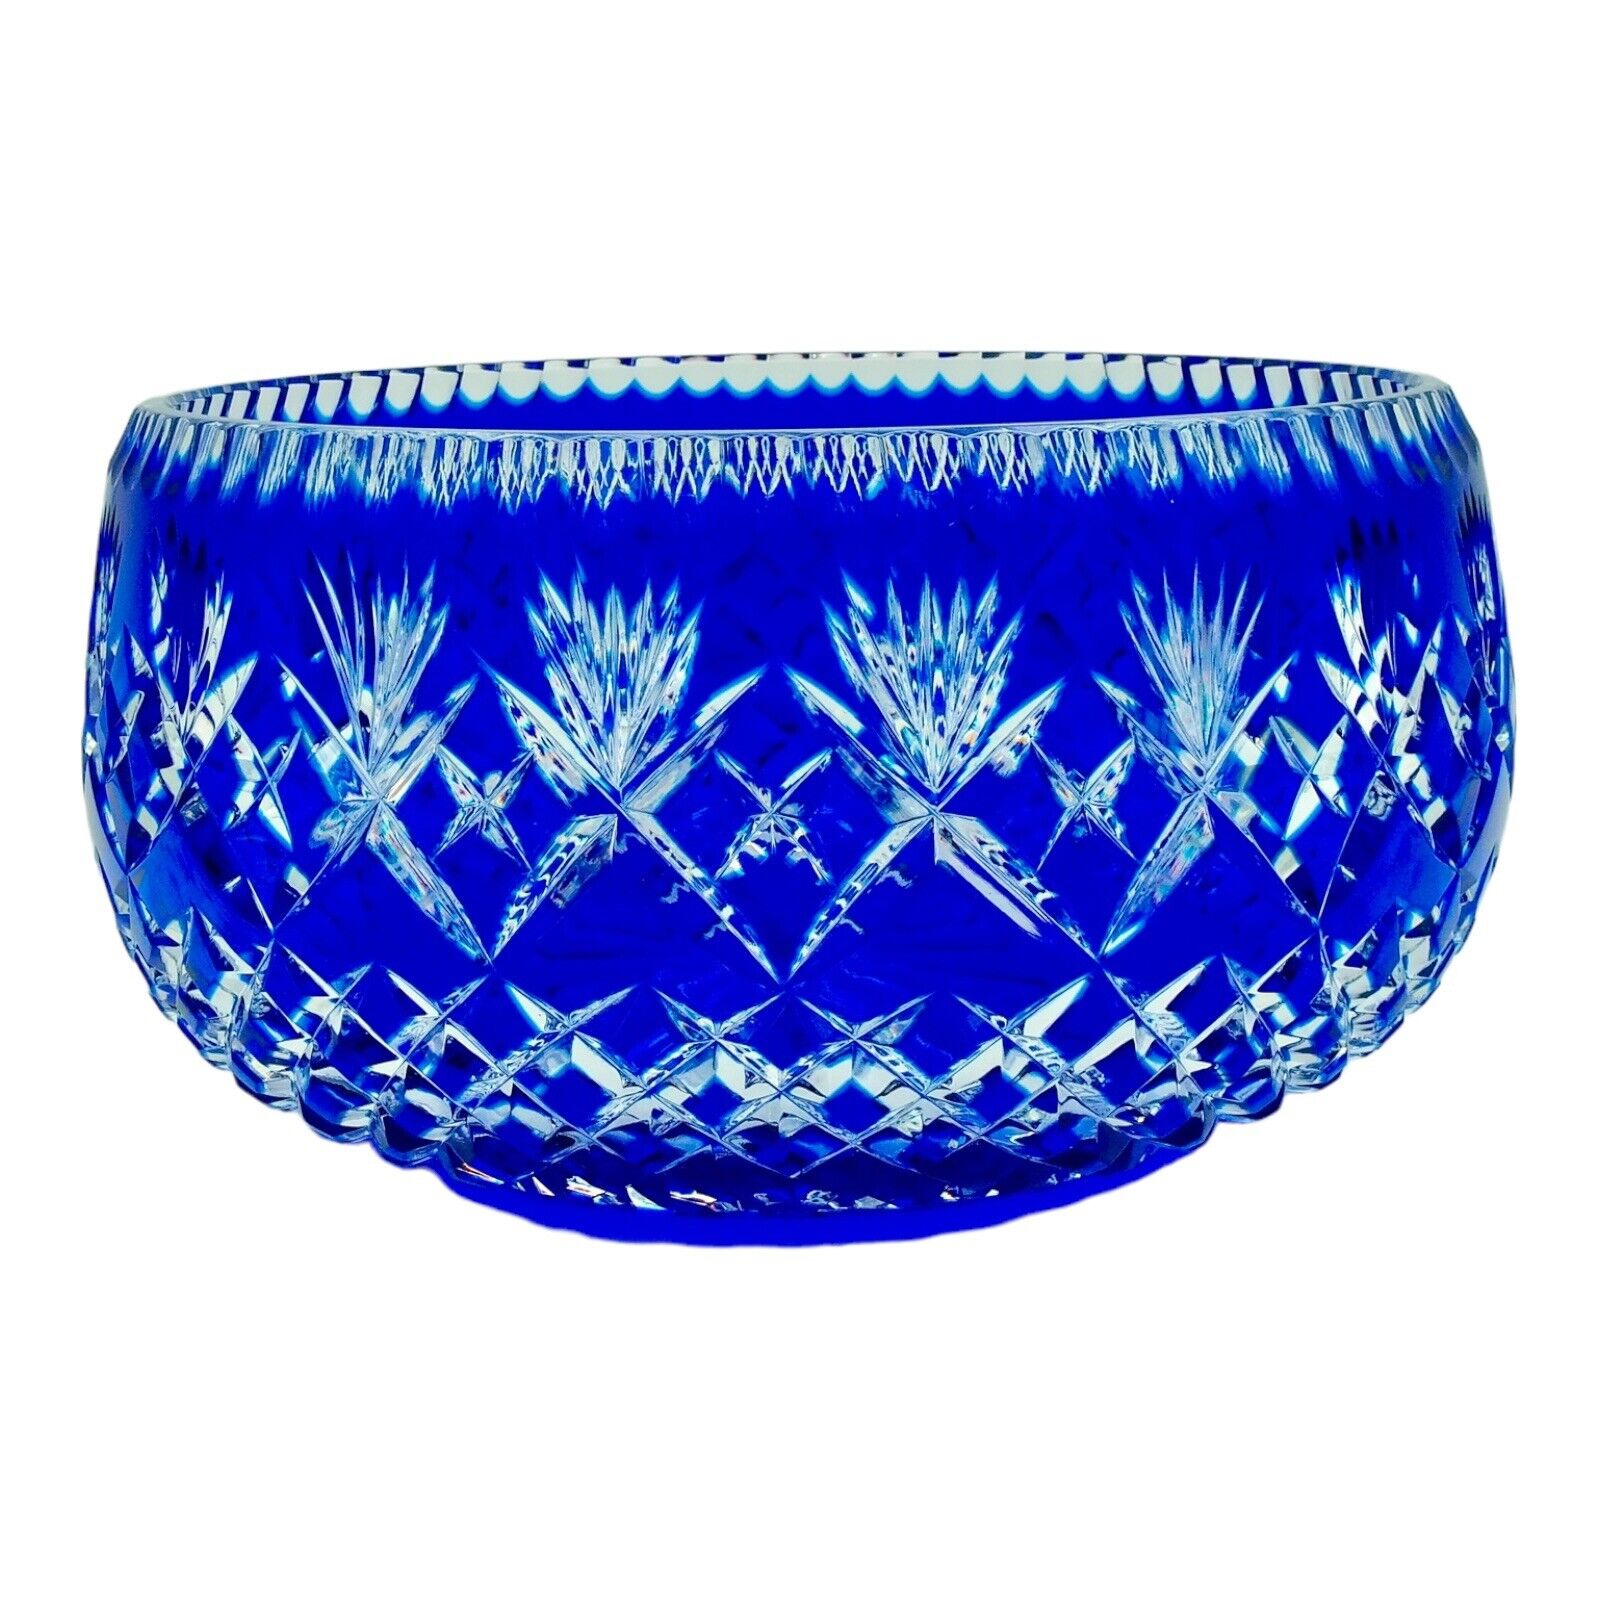 Rare Vintage Czech Bohemian Cobalt Blue Cut to Clear Lead Crystal Glass Bowl